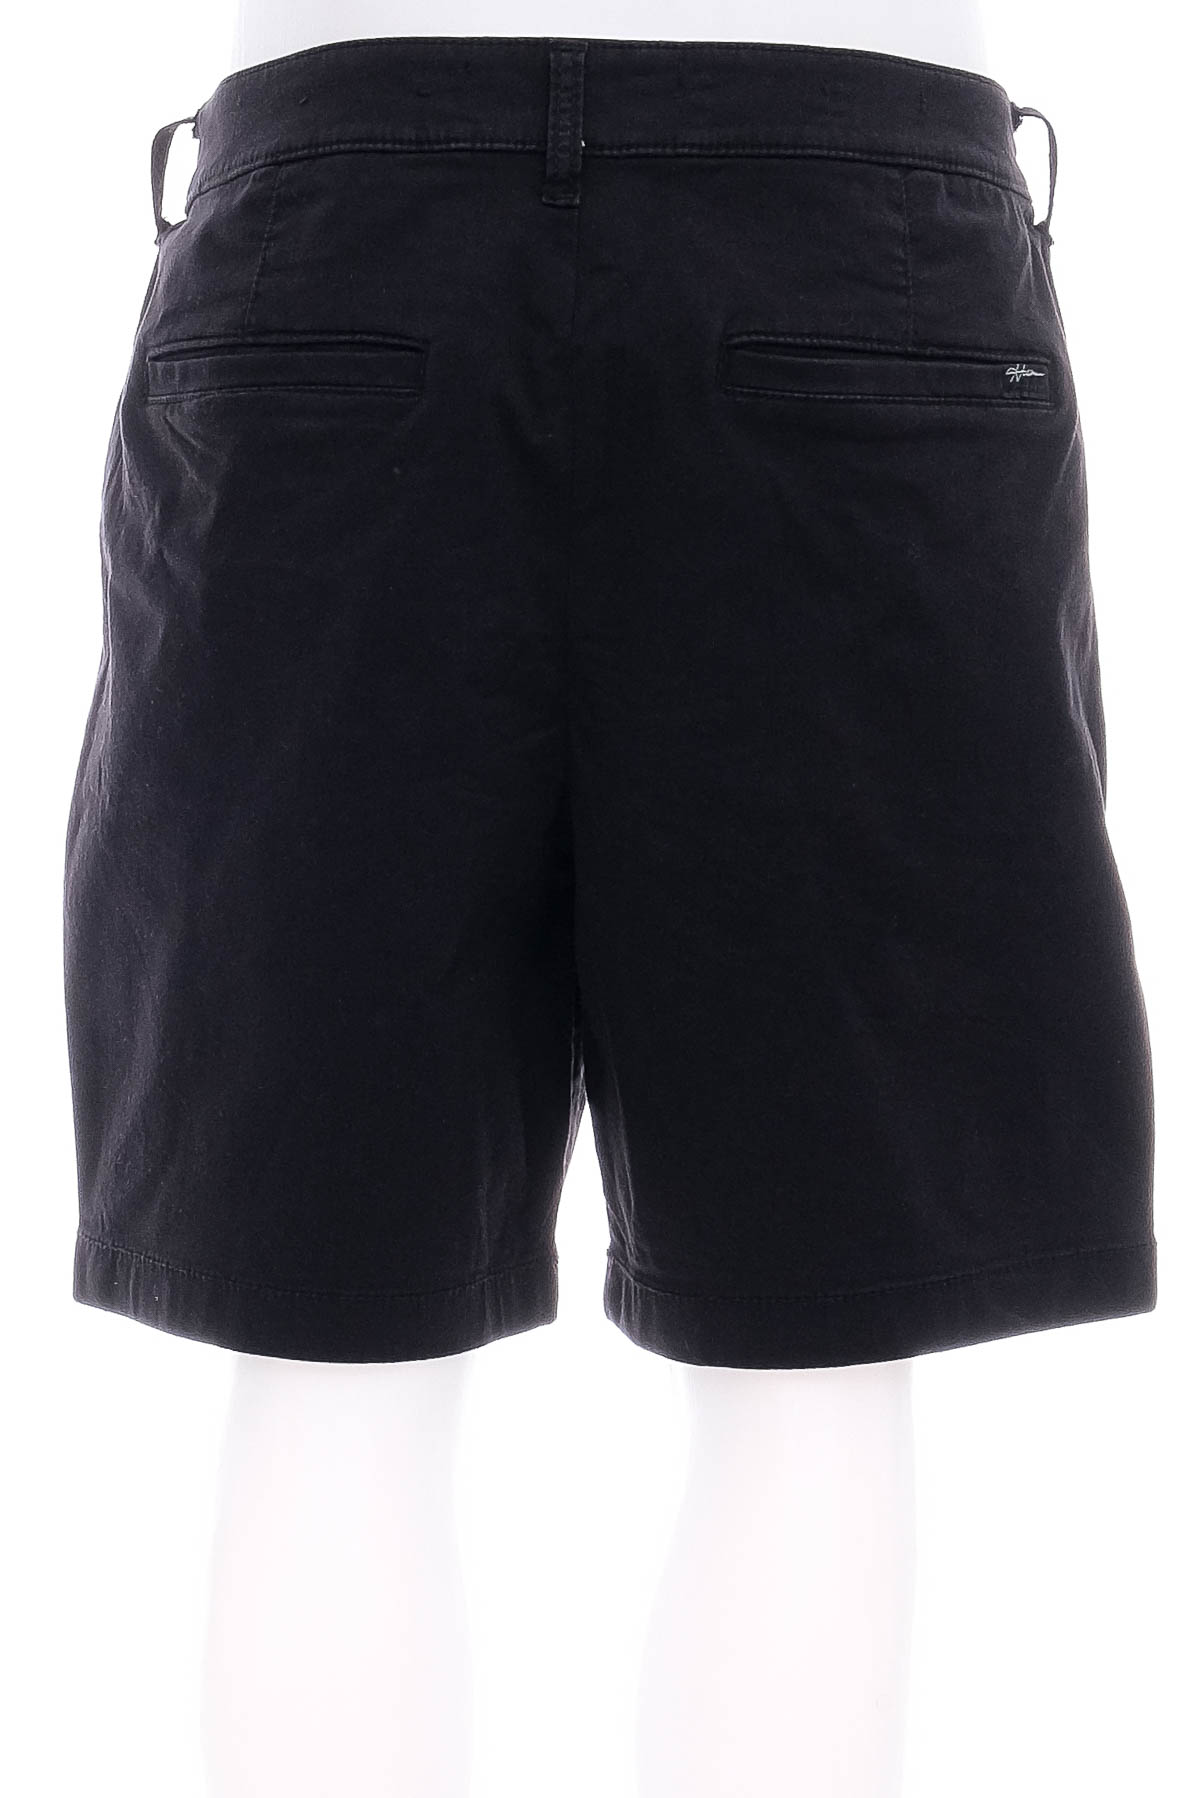 Men's shorts - HOLLISTER - 1